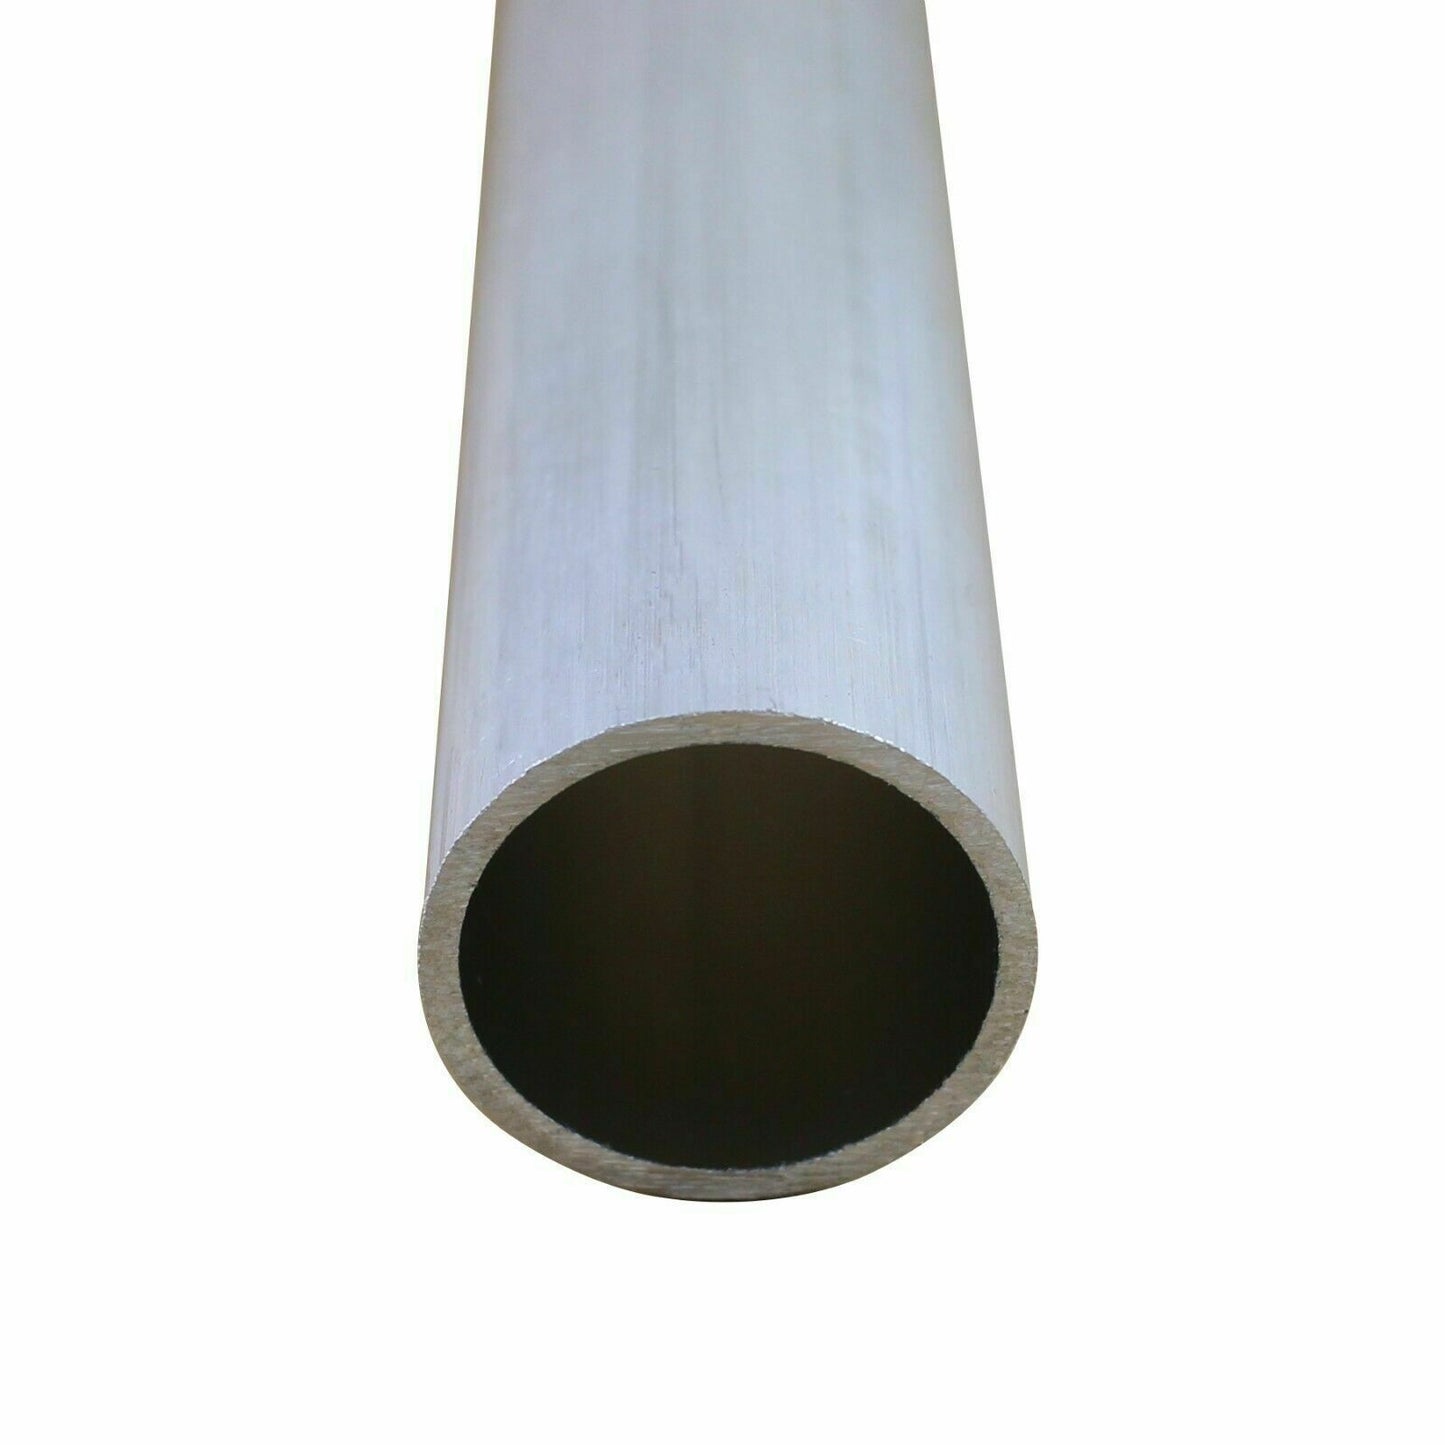 OD 20 mm ID 14 mm 1 Pcs Aluminum Round Tube Pipe